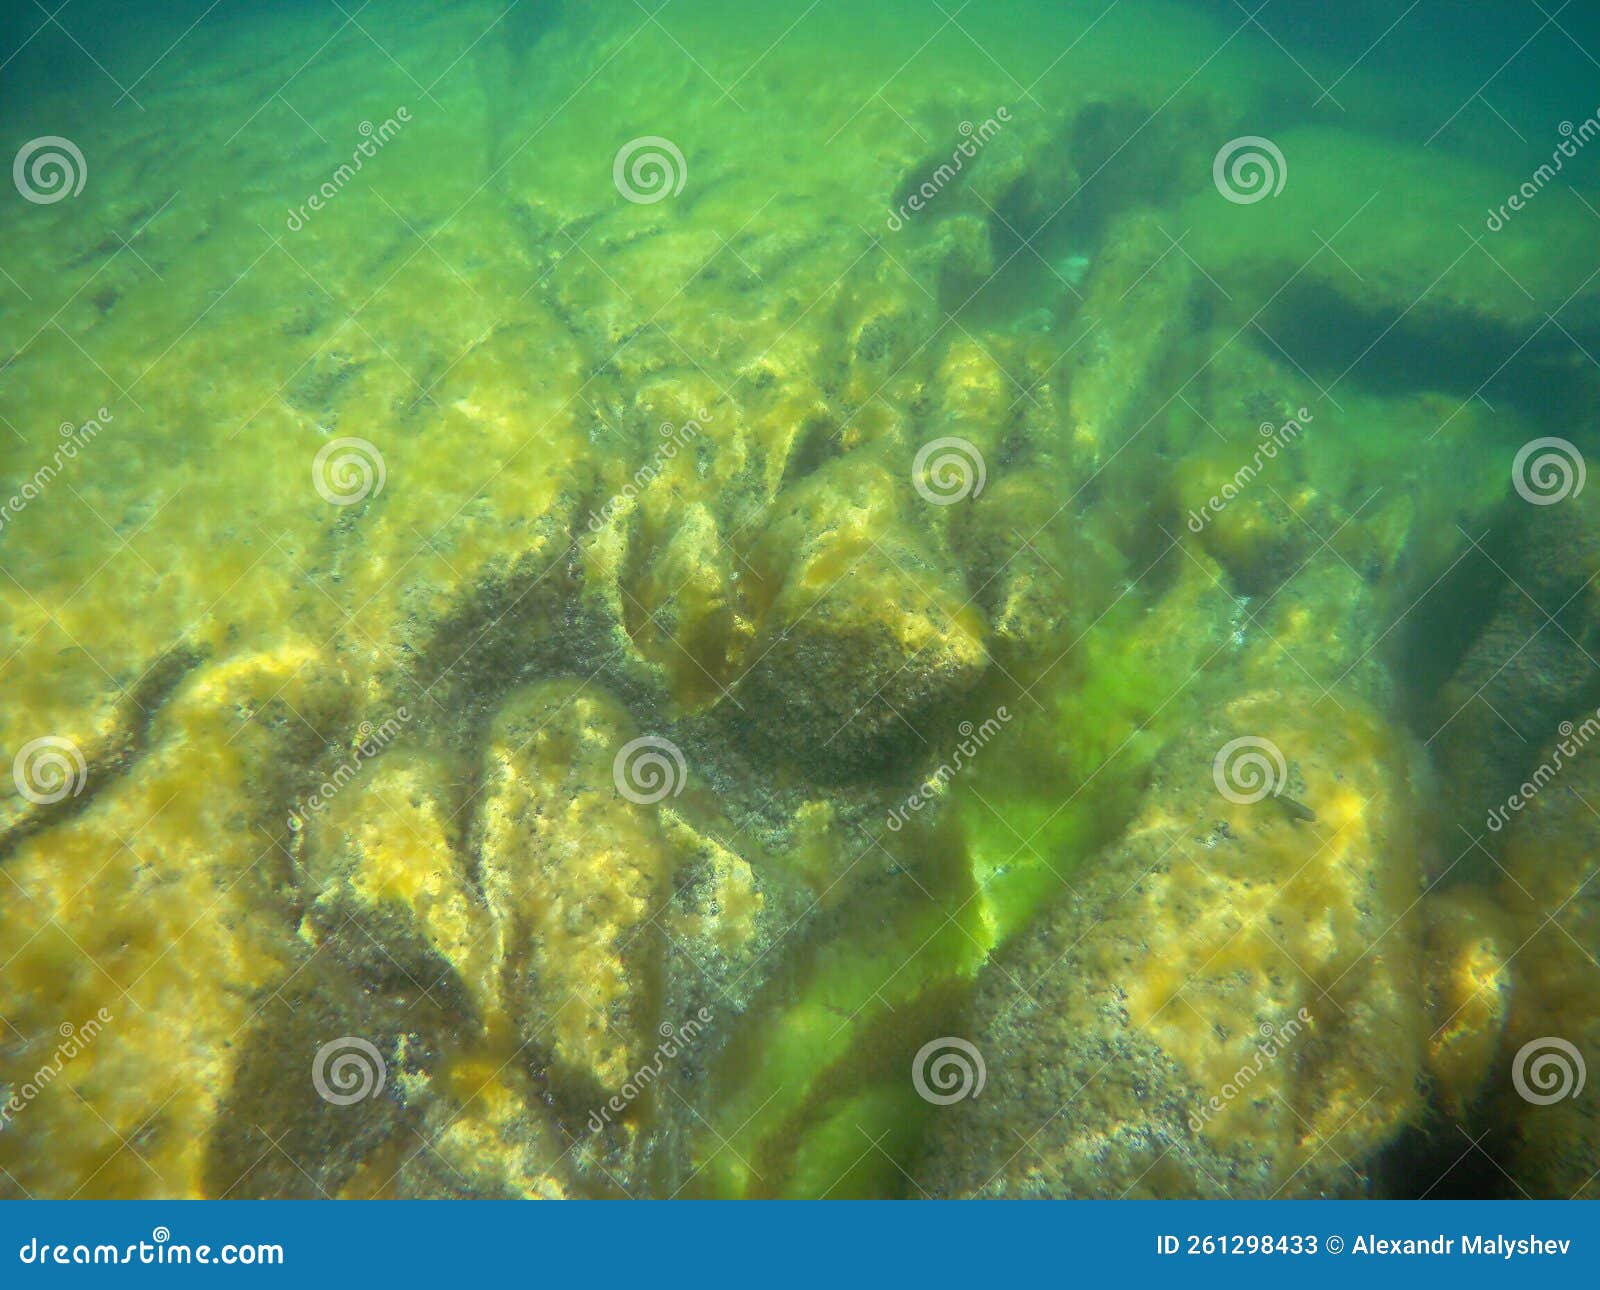 Underwater Landscape in the Sea. Caspian Sea Stock Image - Image of ...